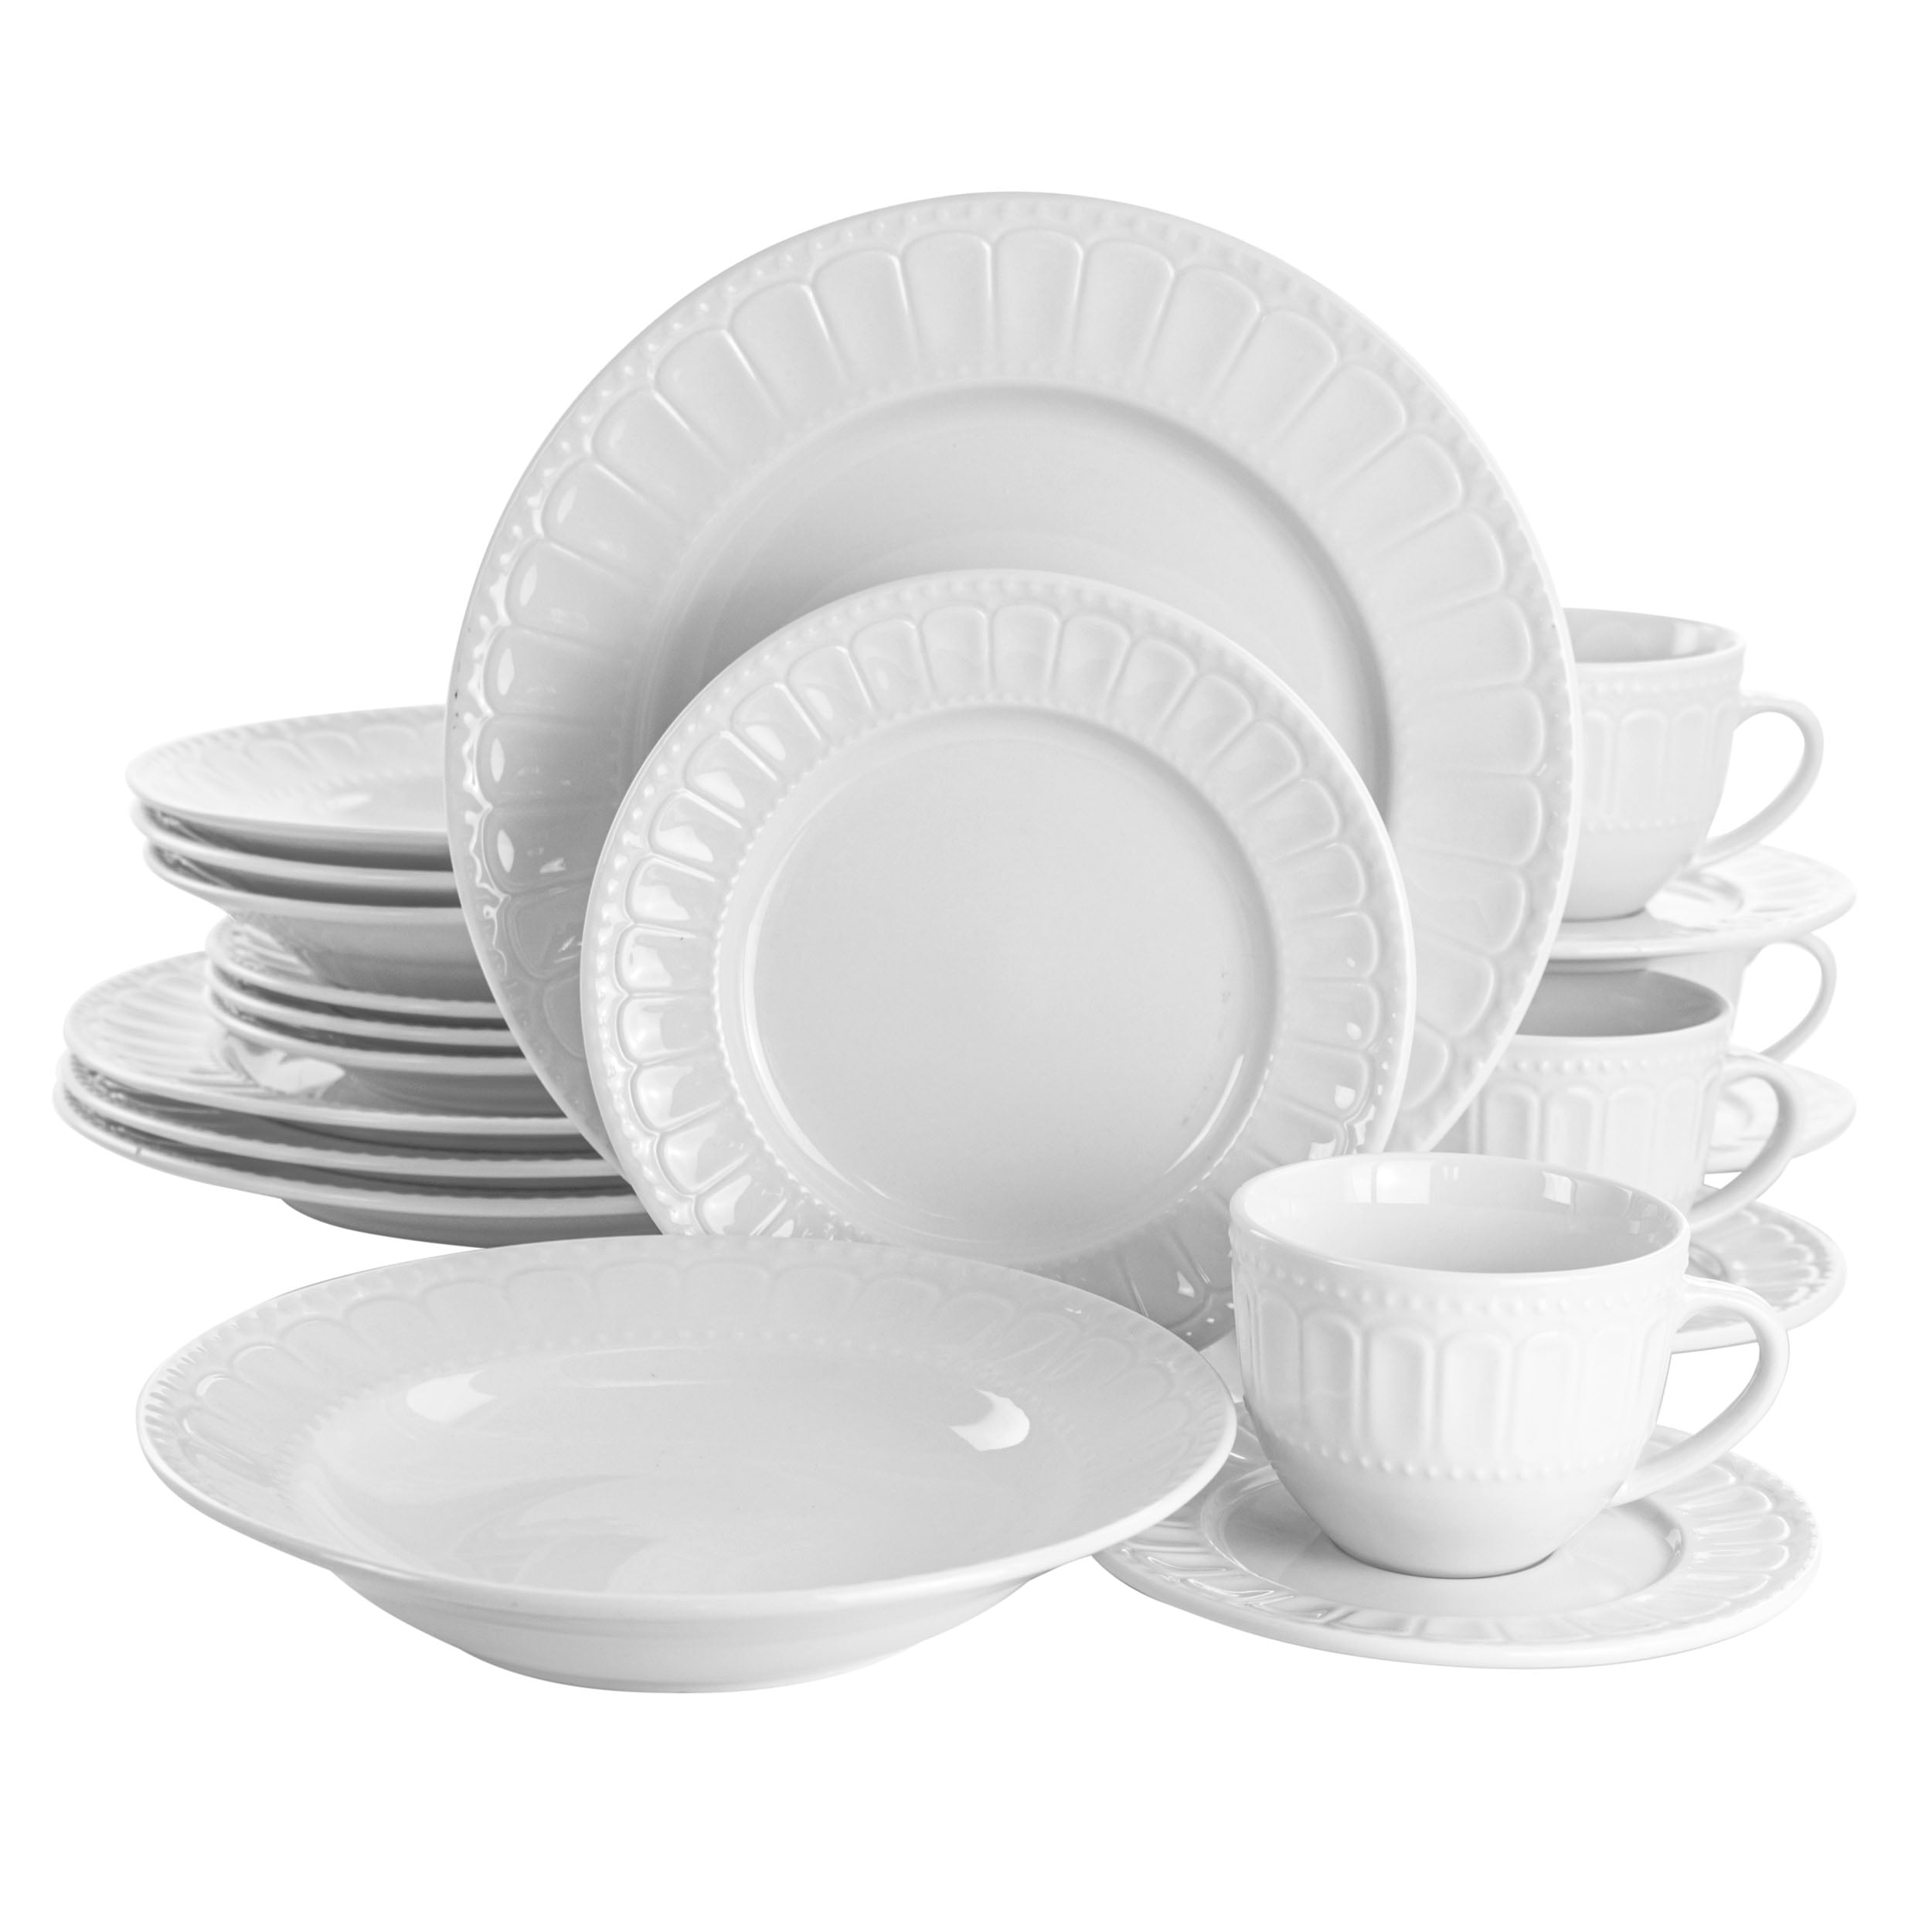 Elama Charlotte 20 Piece Porcelain Dinnerware Set in White - Walmart ...